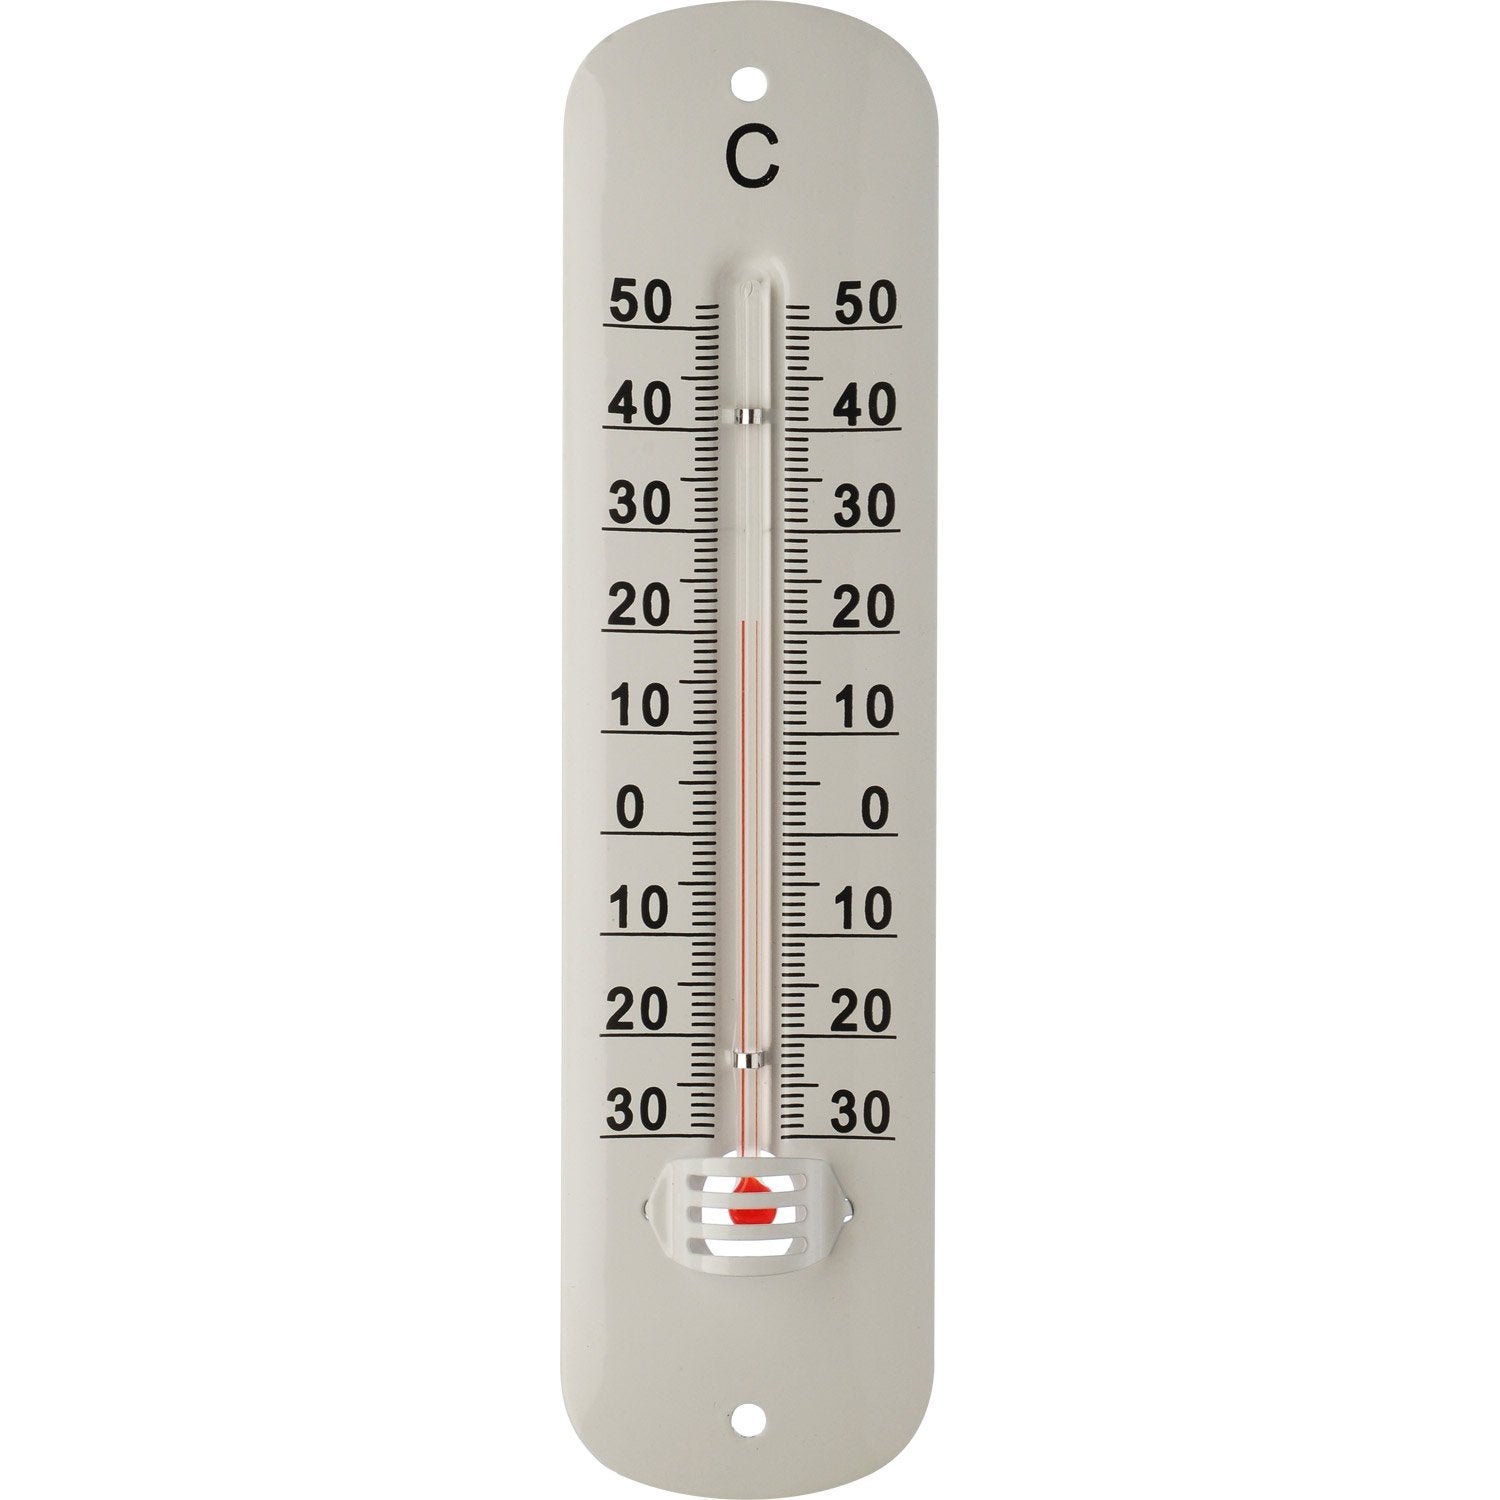 Термометр температура детская. Гигро-термометр разм 250*56*12мм, Deli 9013. Tm1053 комнатно-уличный термометр. Термометр натужный ТНС 13. Термометр фасадный ТС-255.